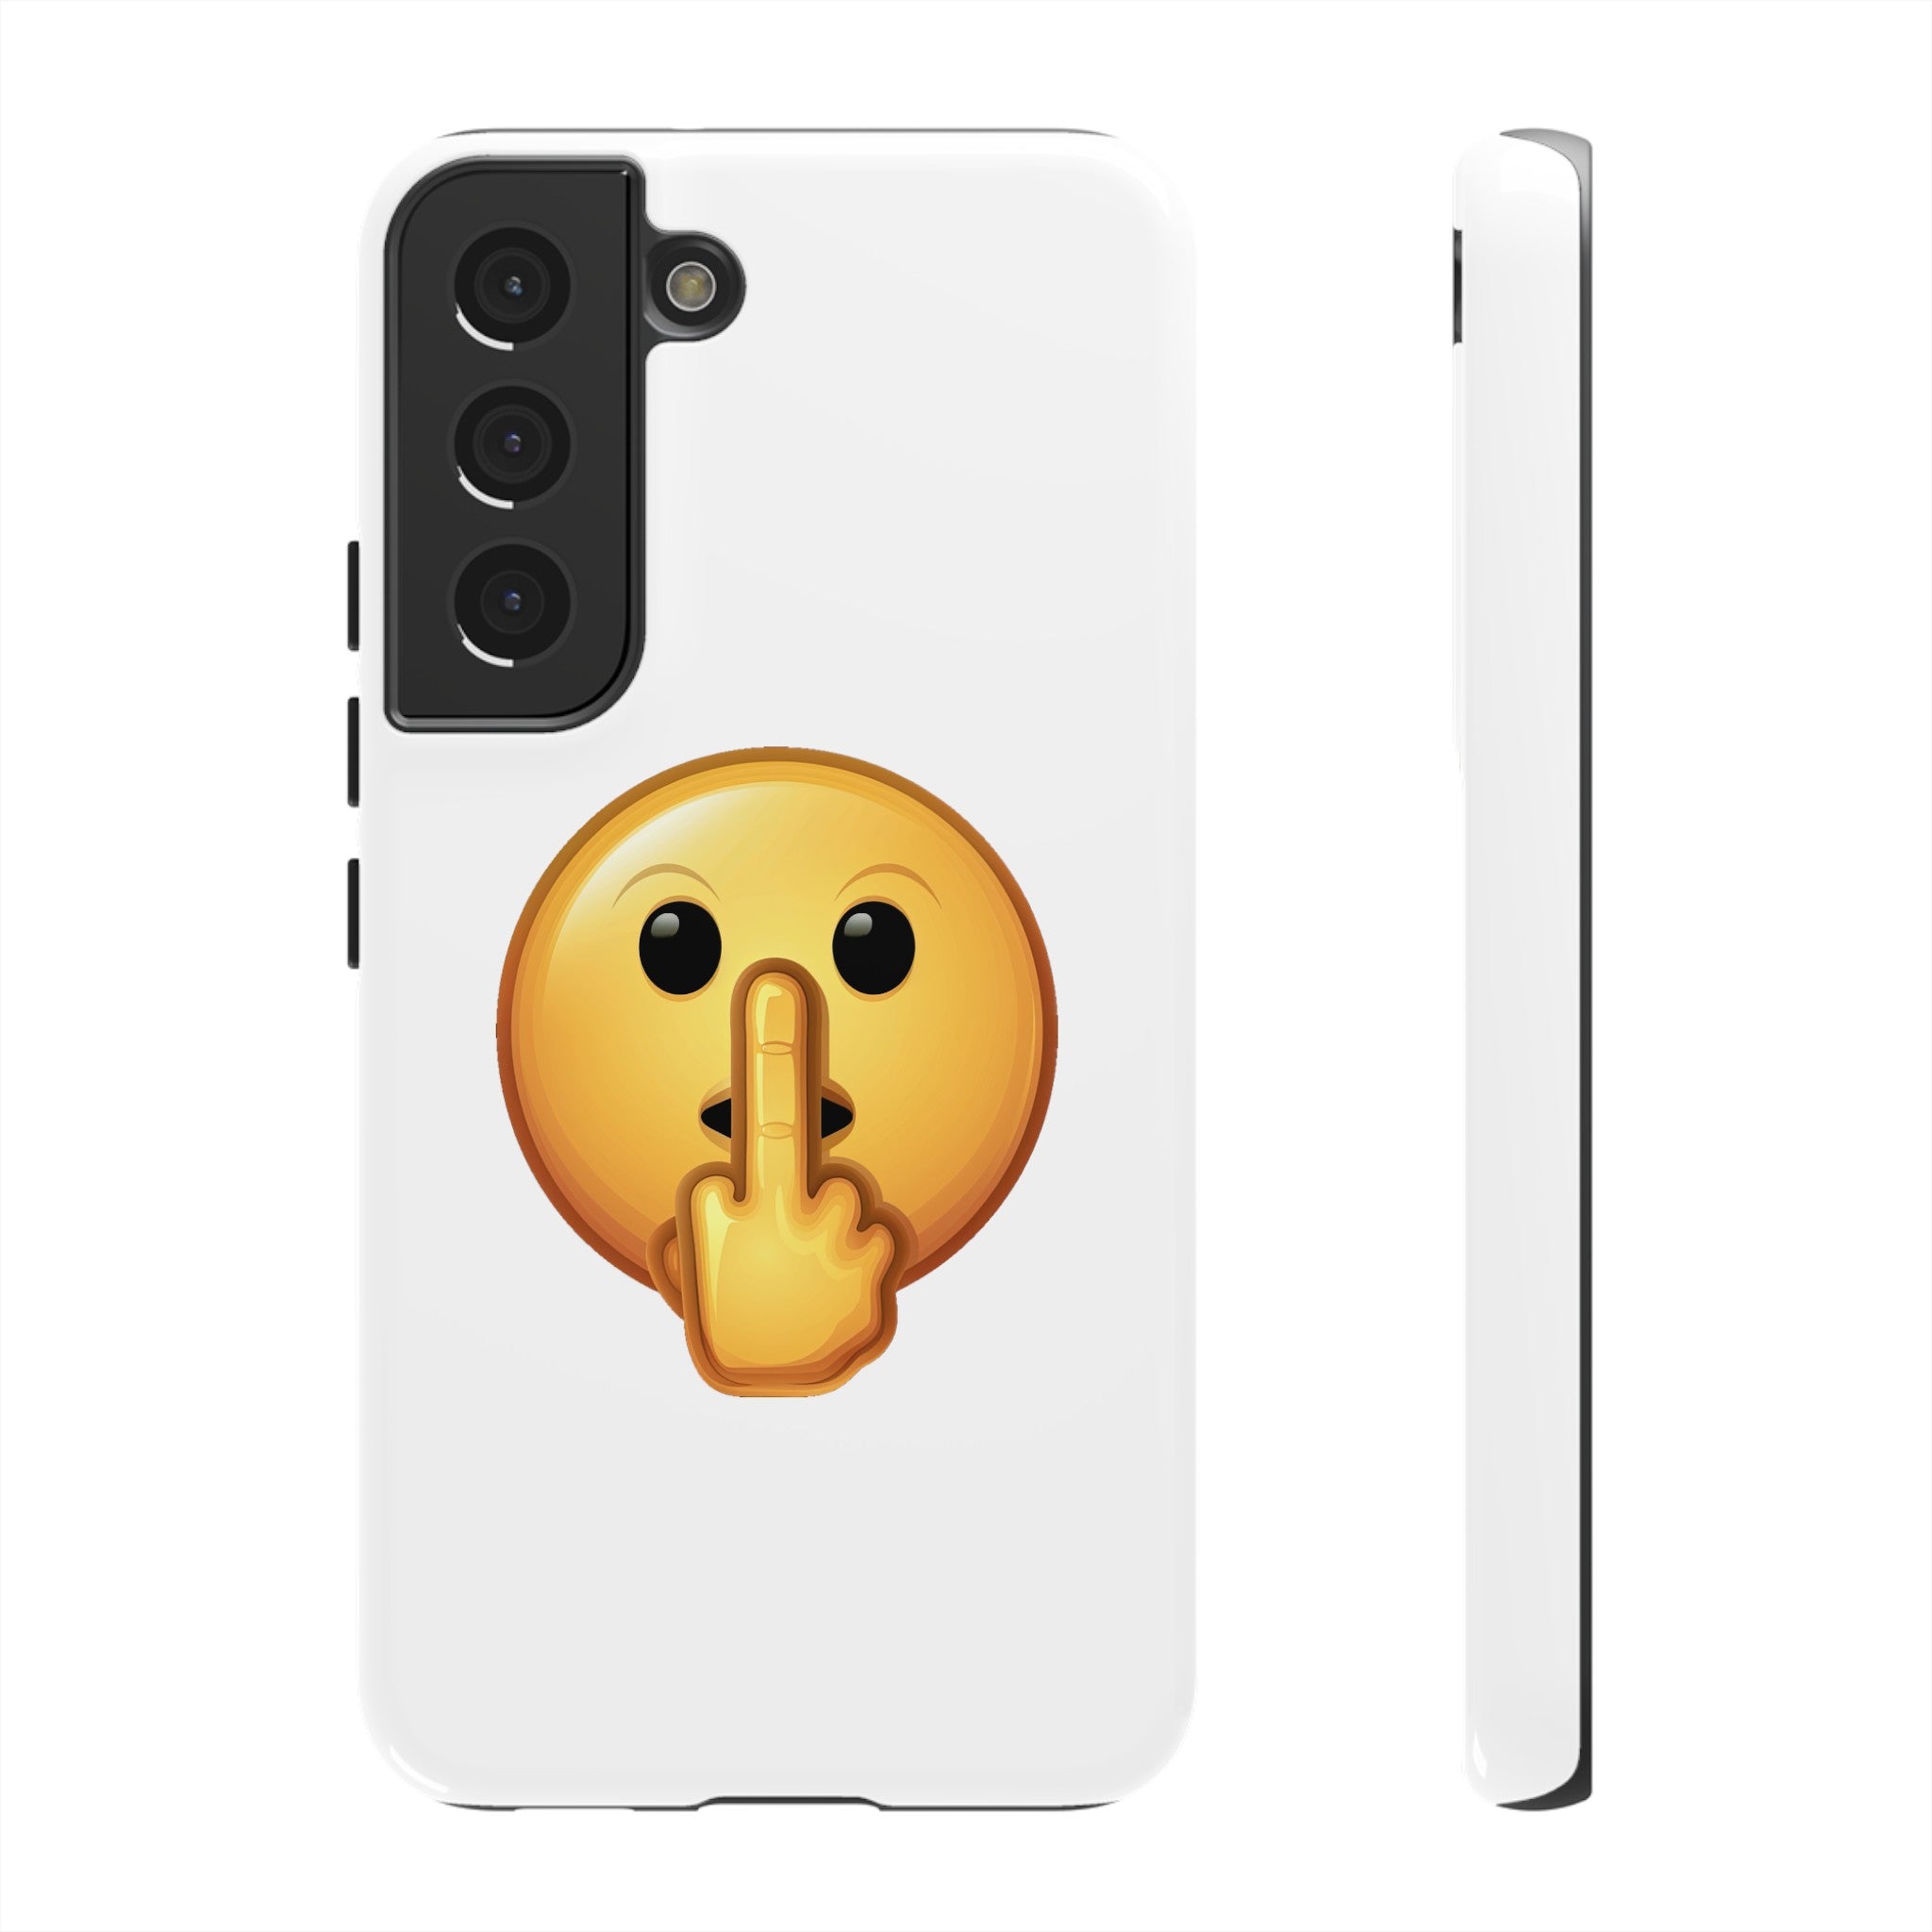 Middle Finger FU Shh Silent Protest Emoji Phone Tough Cases